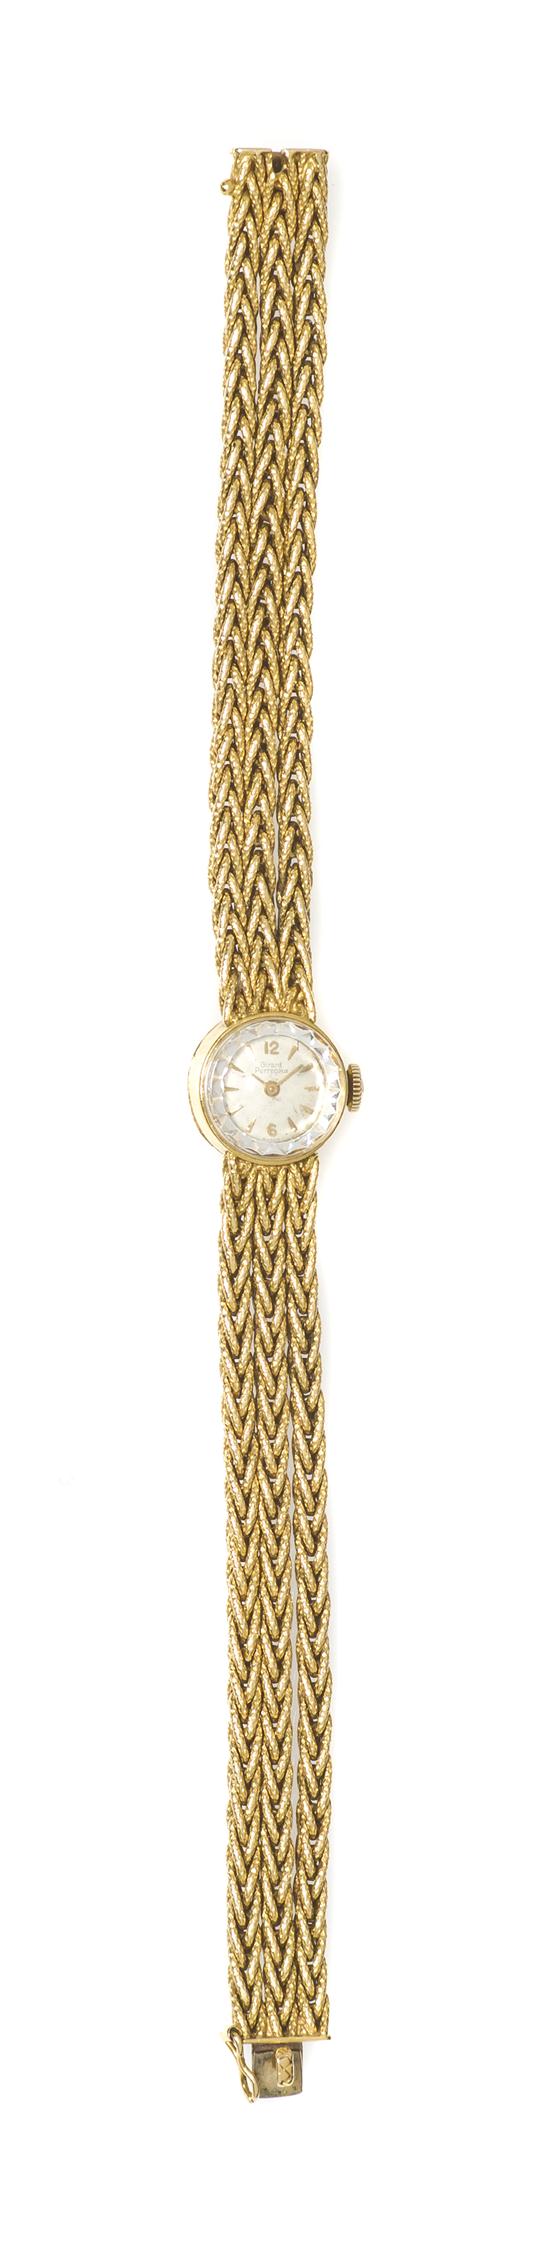 A Vintage 18 Karat Yellow Gold Wristwatch